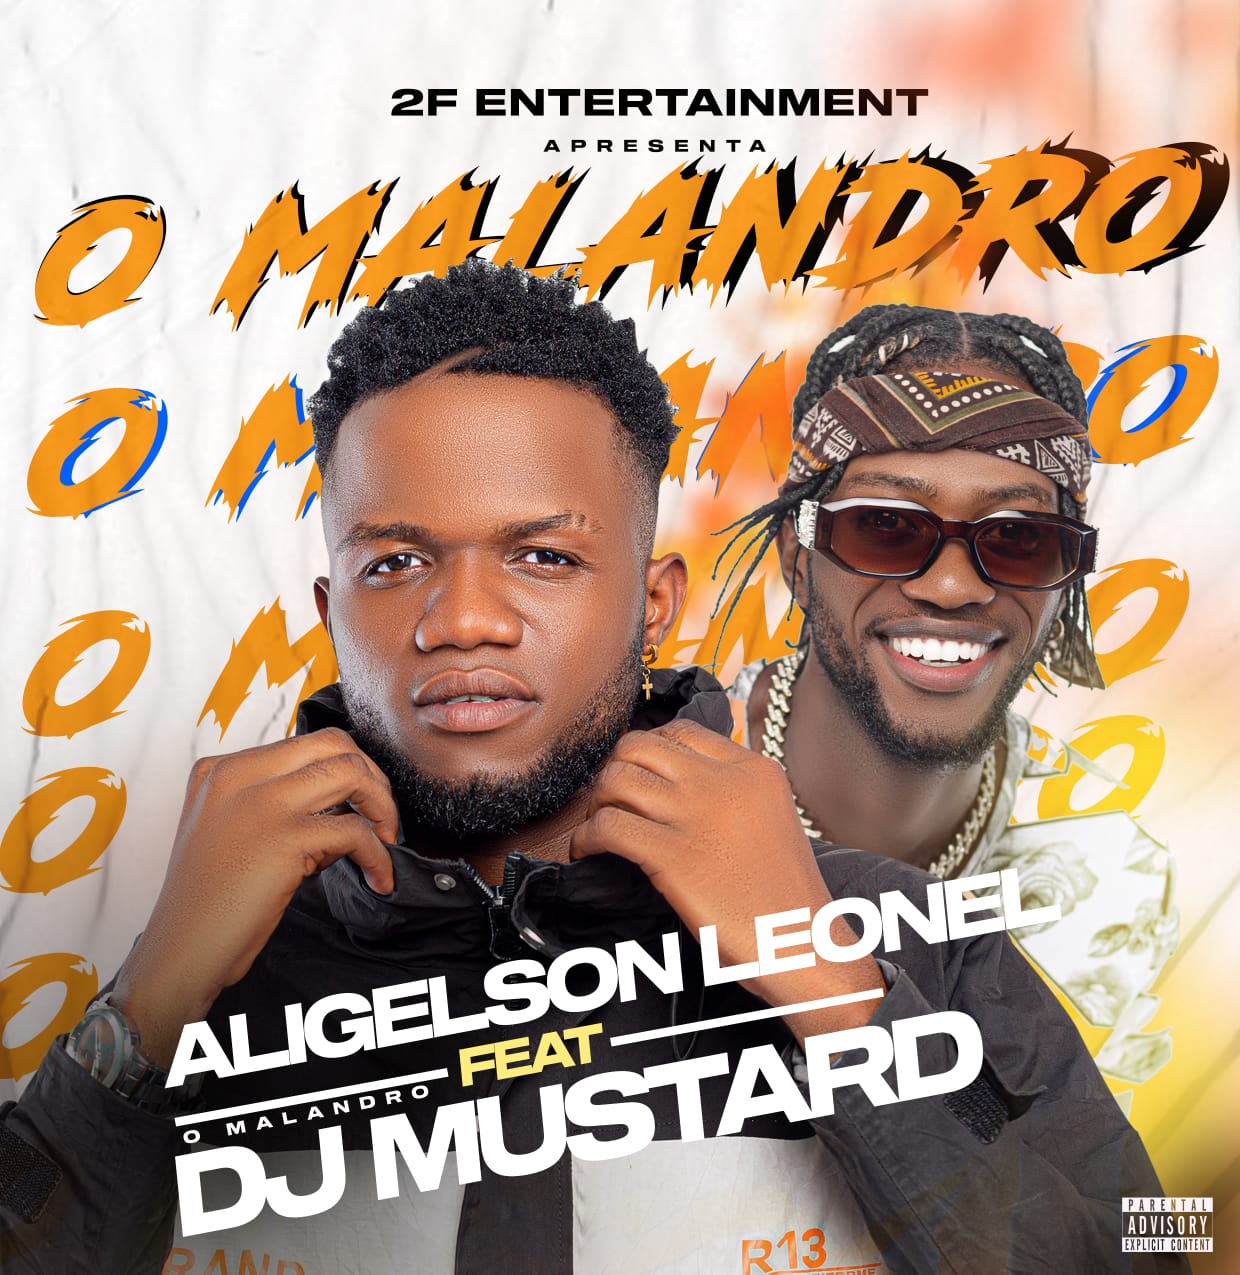 Aligelson Leonel Feat. Dj Mustard - O Malandro Instrumental de Afro House download